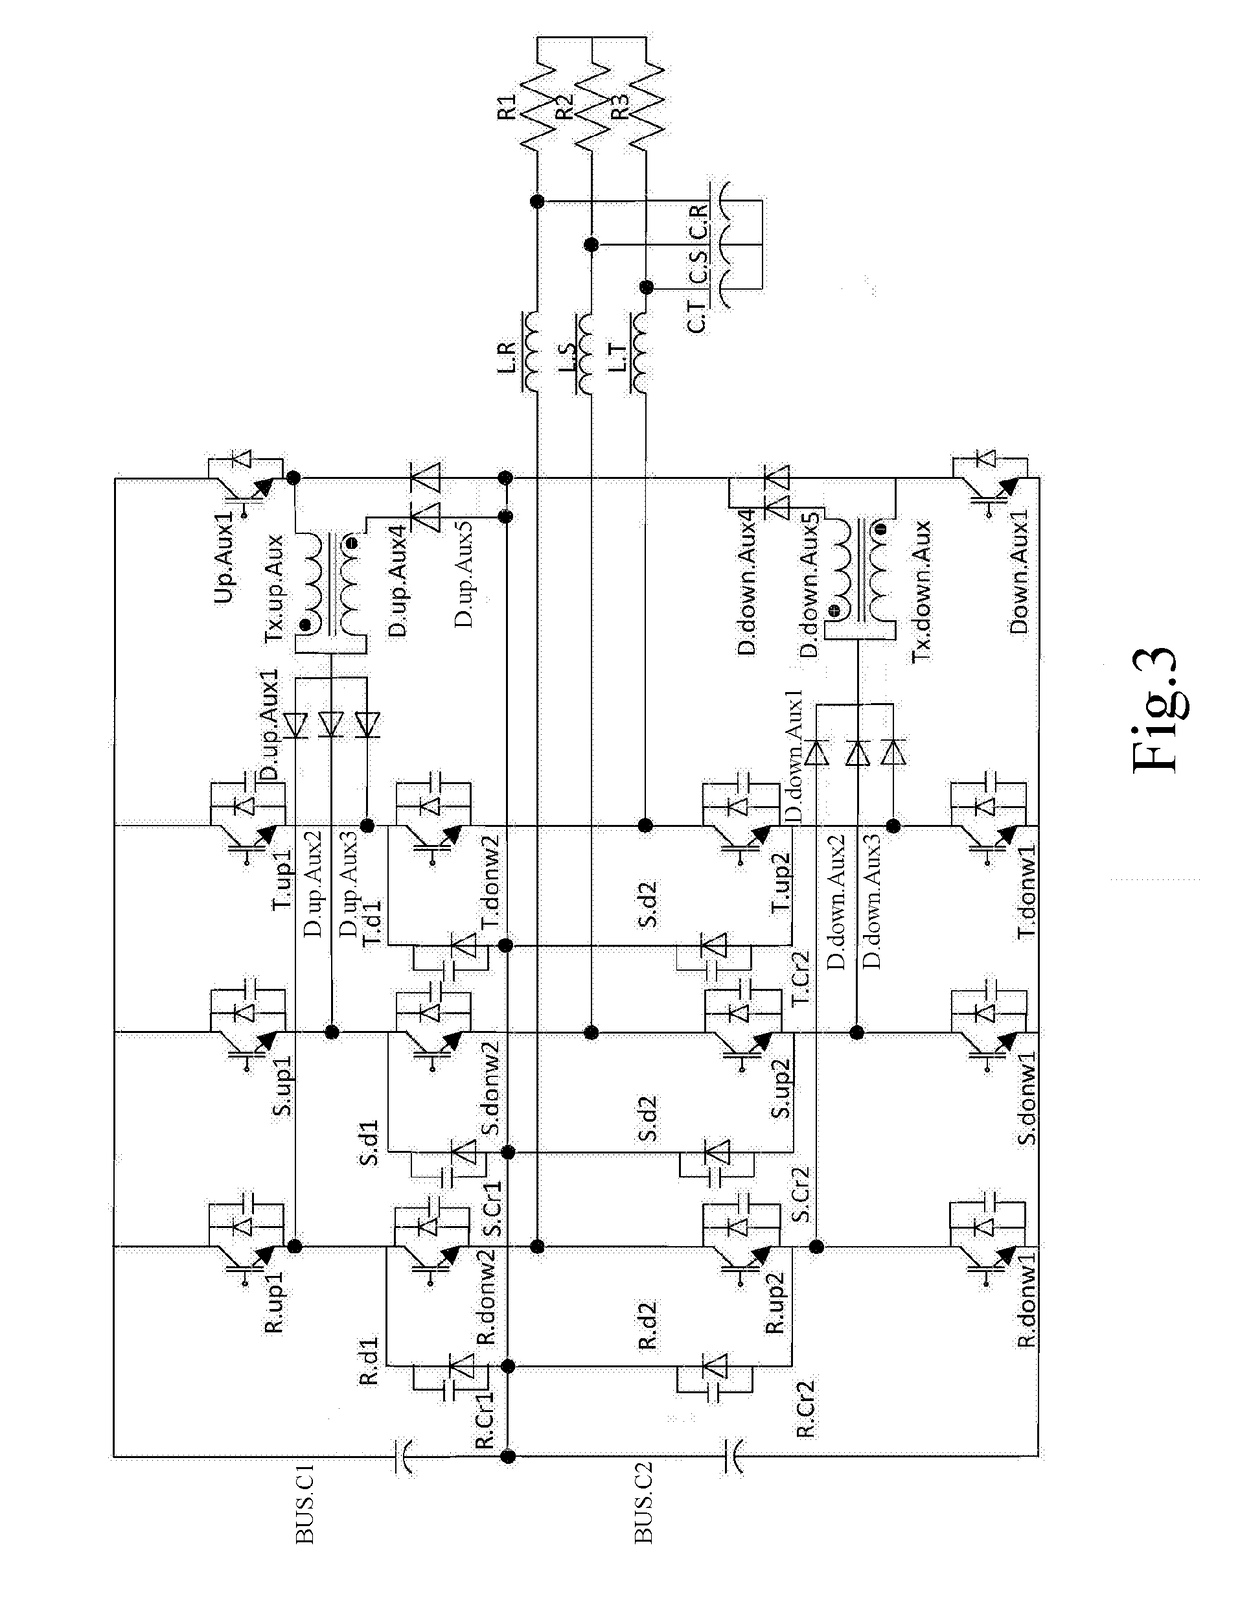 Soft Switching Auxiliary Circuit, Three-Level Three-Phase Zero-Voltage Conversion Circuit